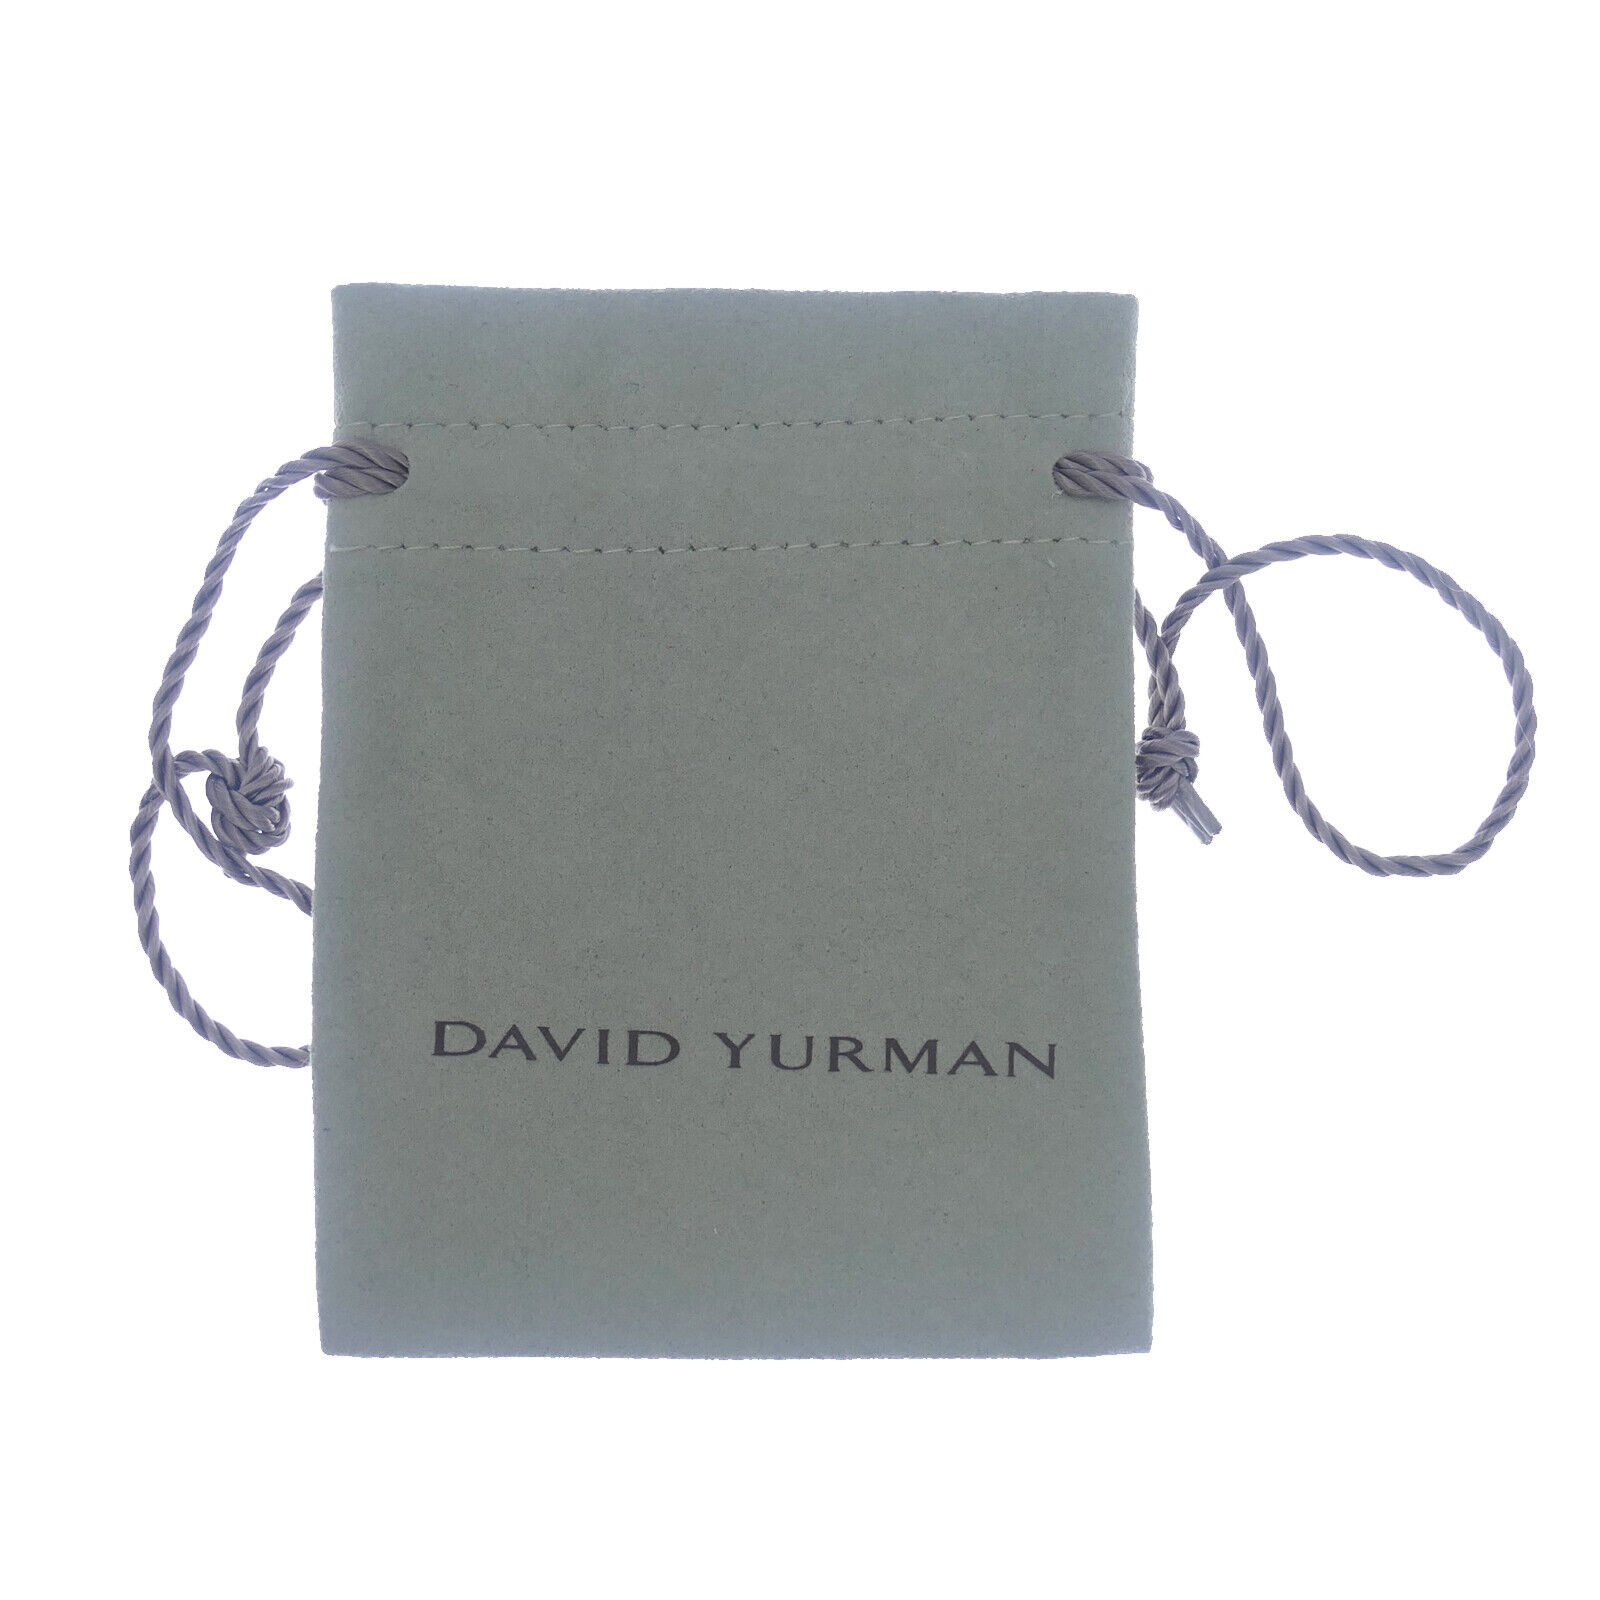 DAVID YURMAN MEDIUM SIZE TAUPE VELVET JEWELRY TRAVEL POUCH/BAG